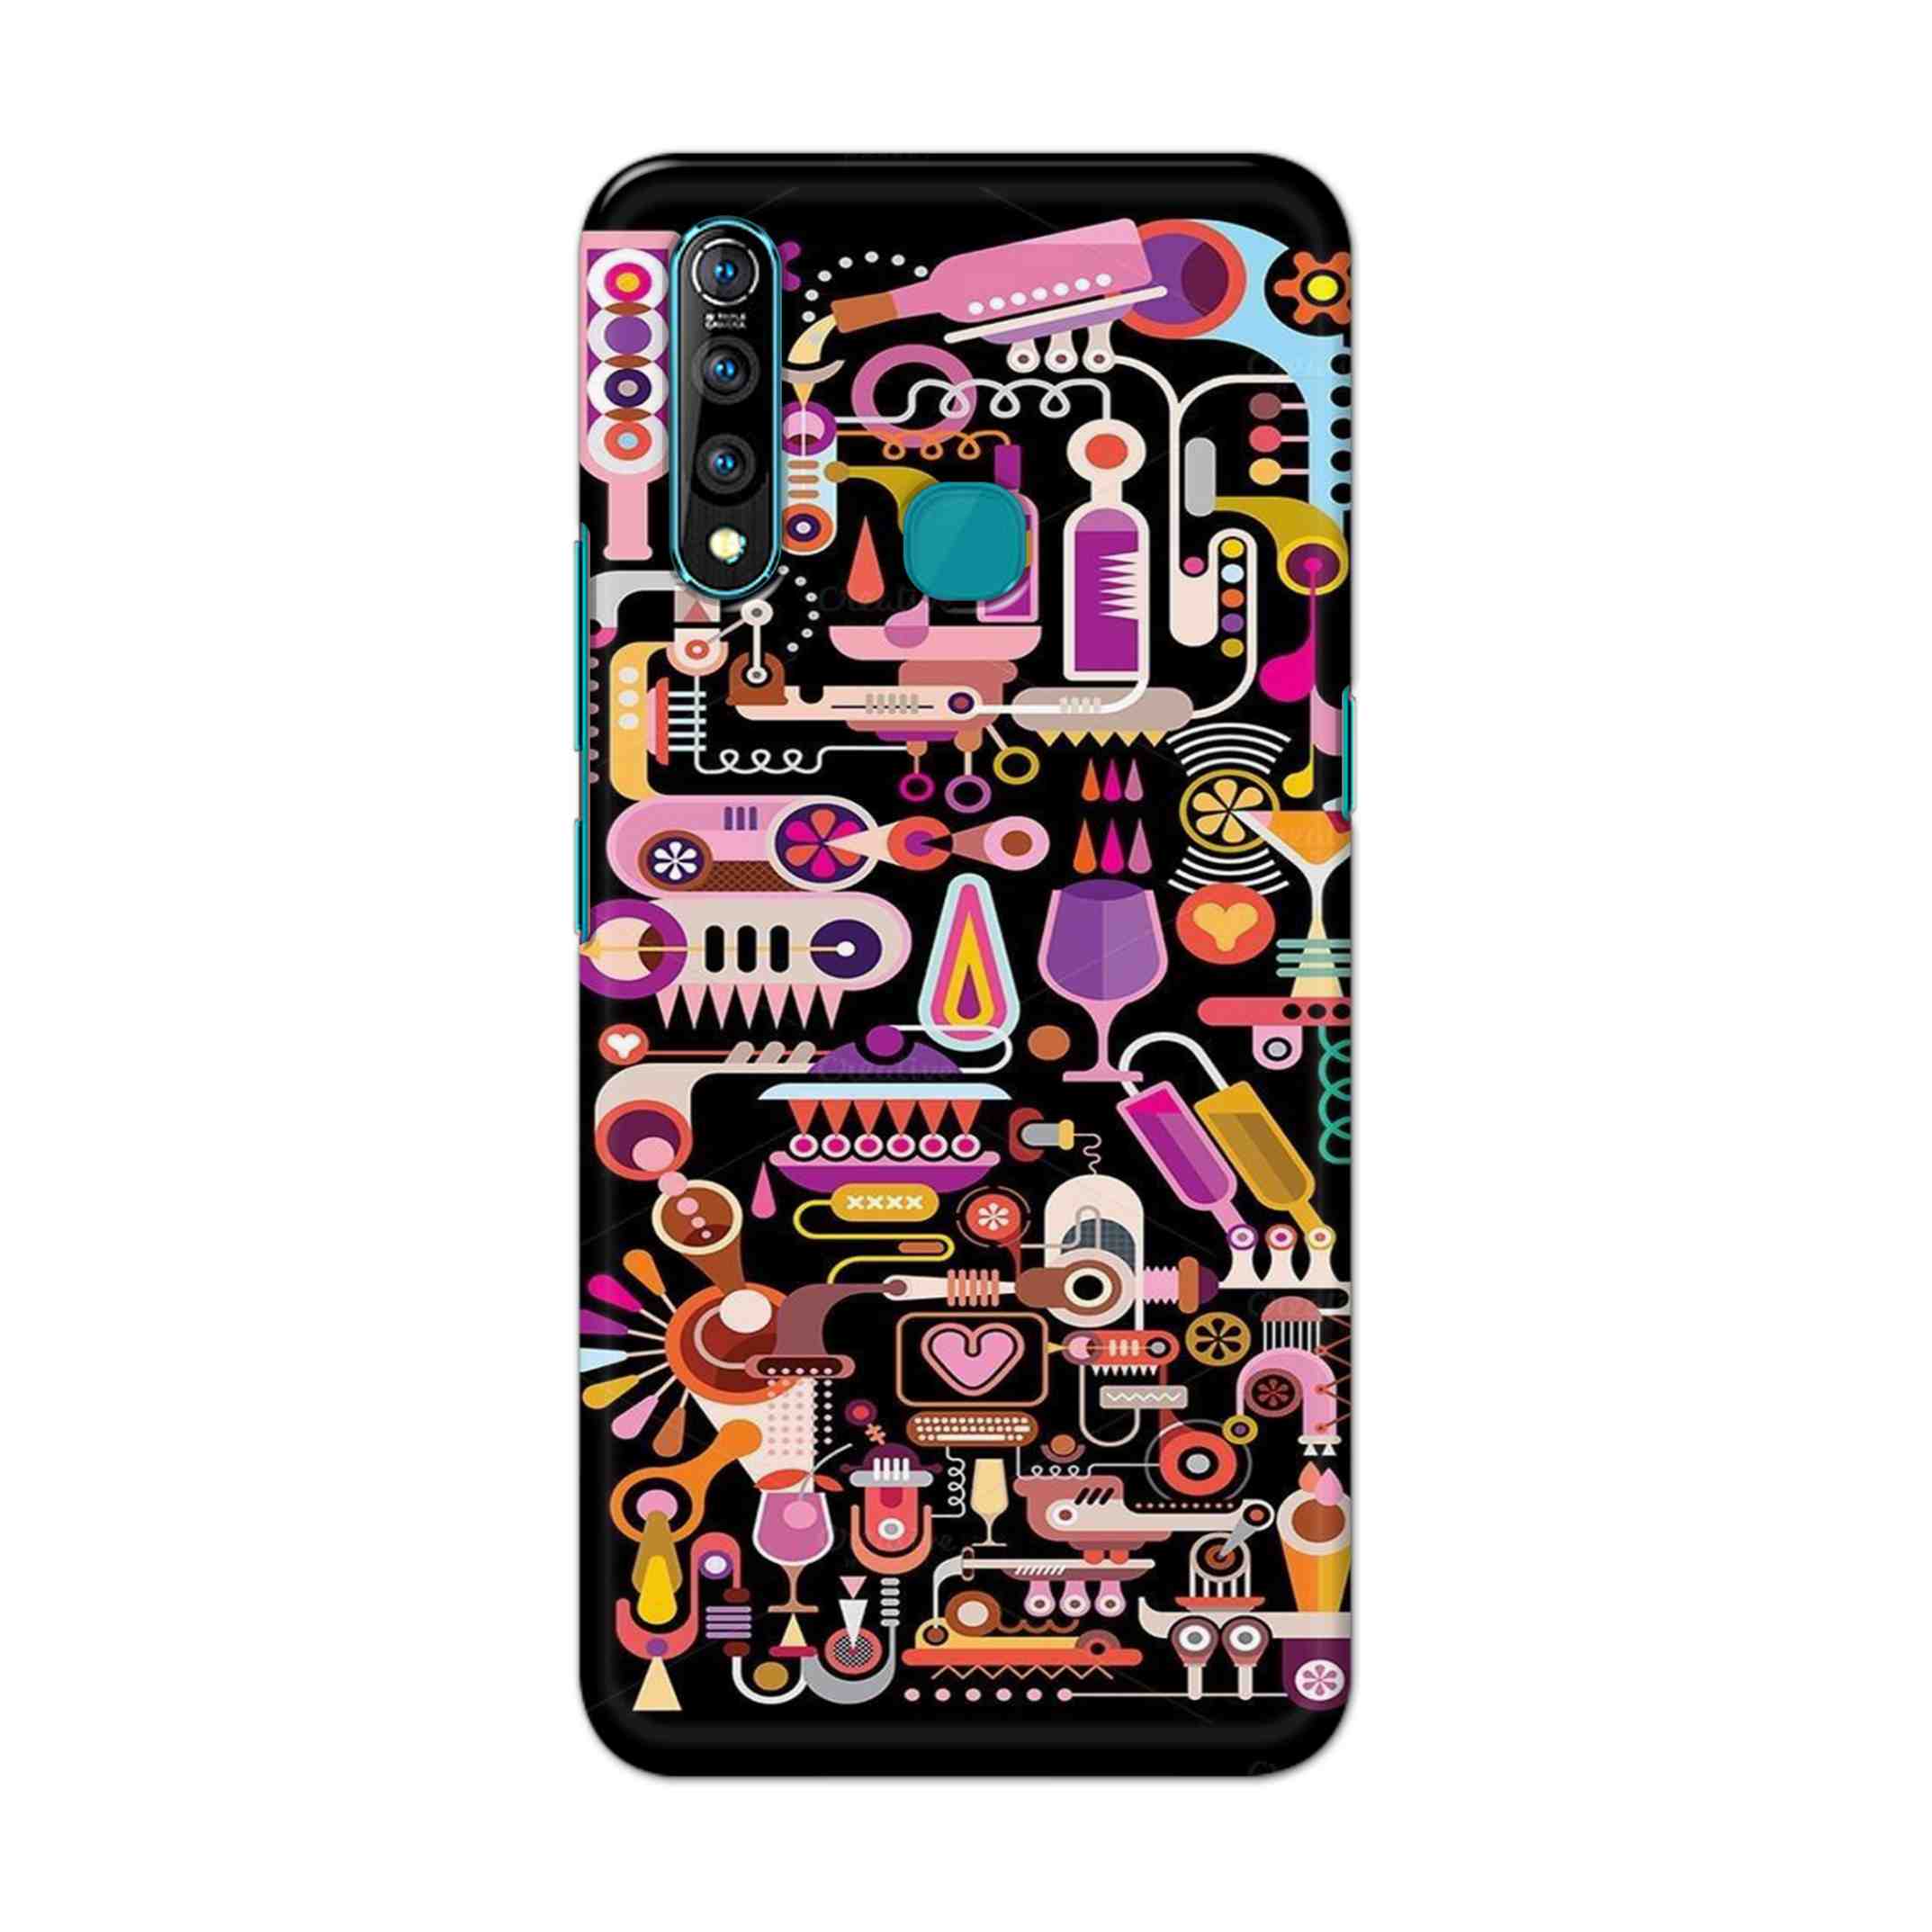 Buy Lab Art Hard Back Mobile Phone Case Cover For Vivo Z1 pro Online